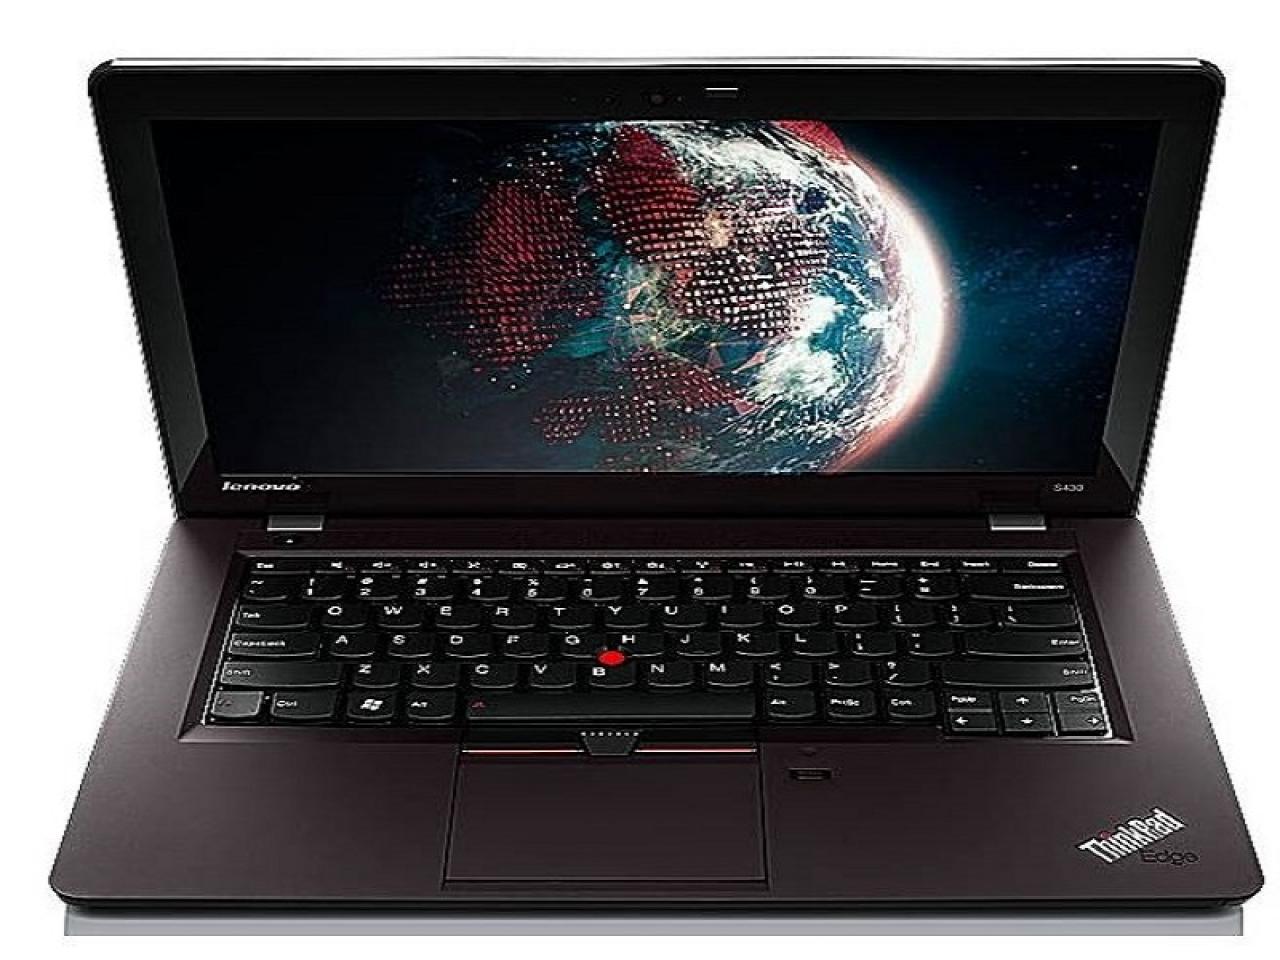 Lenovo ThinkPad S430  - shop.bb-net.de